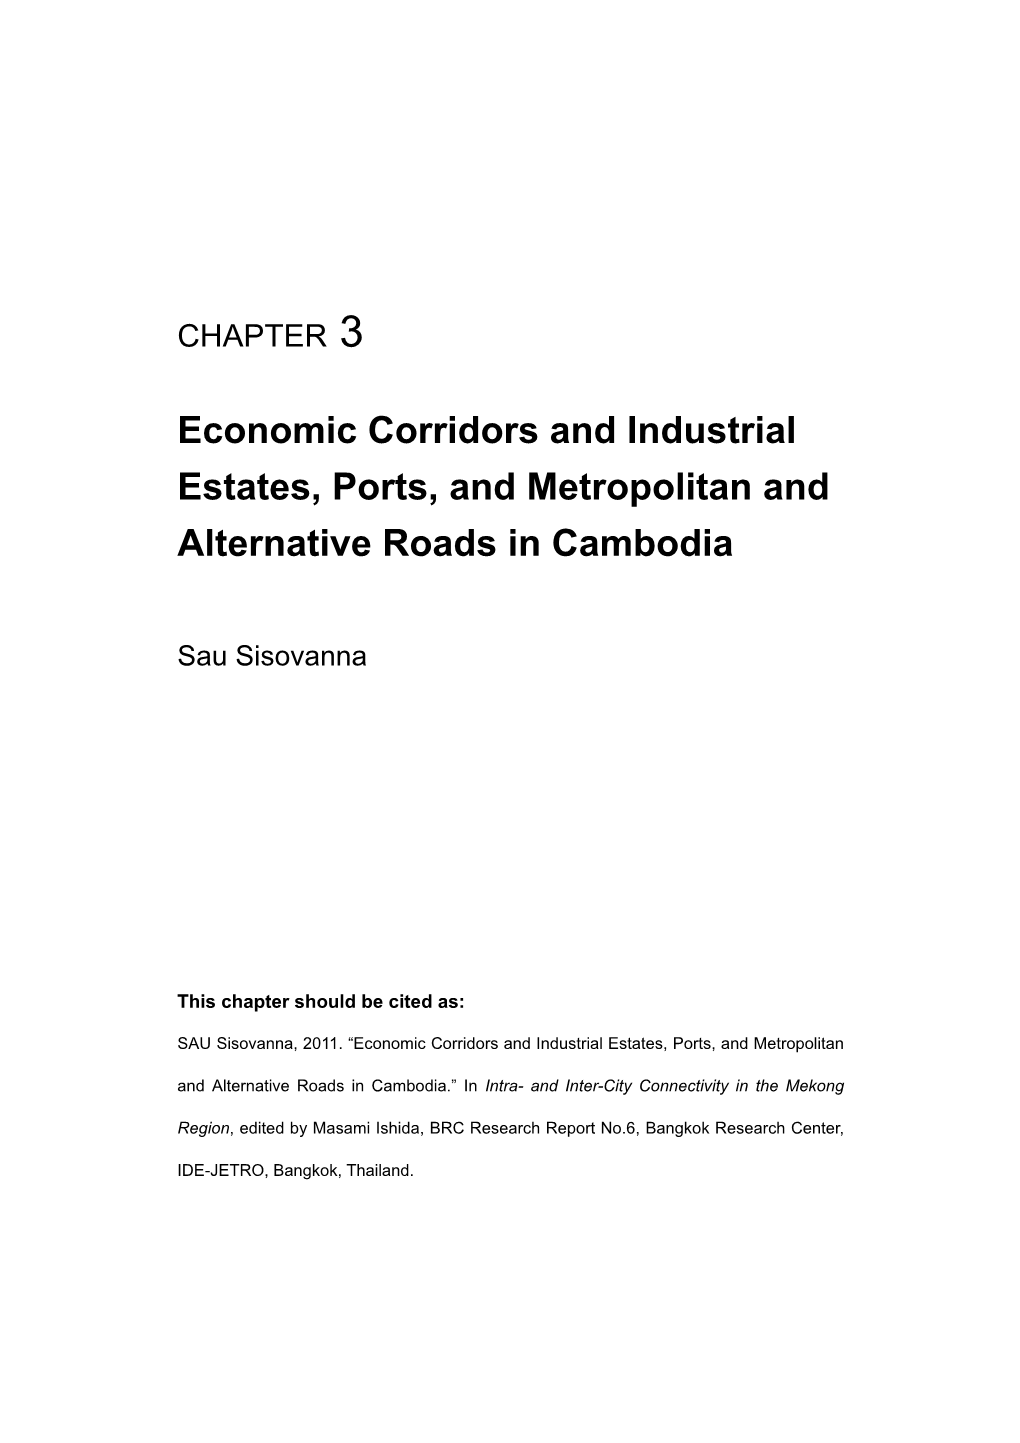 Economic Corridors and Industrial Estates, Ports, and Metropolitan and Alternative Roads in Cambodia